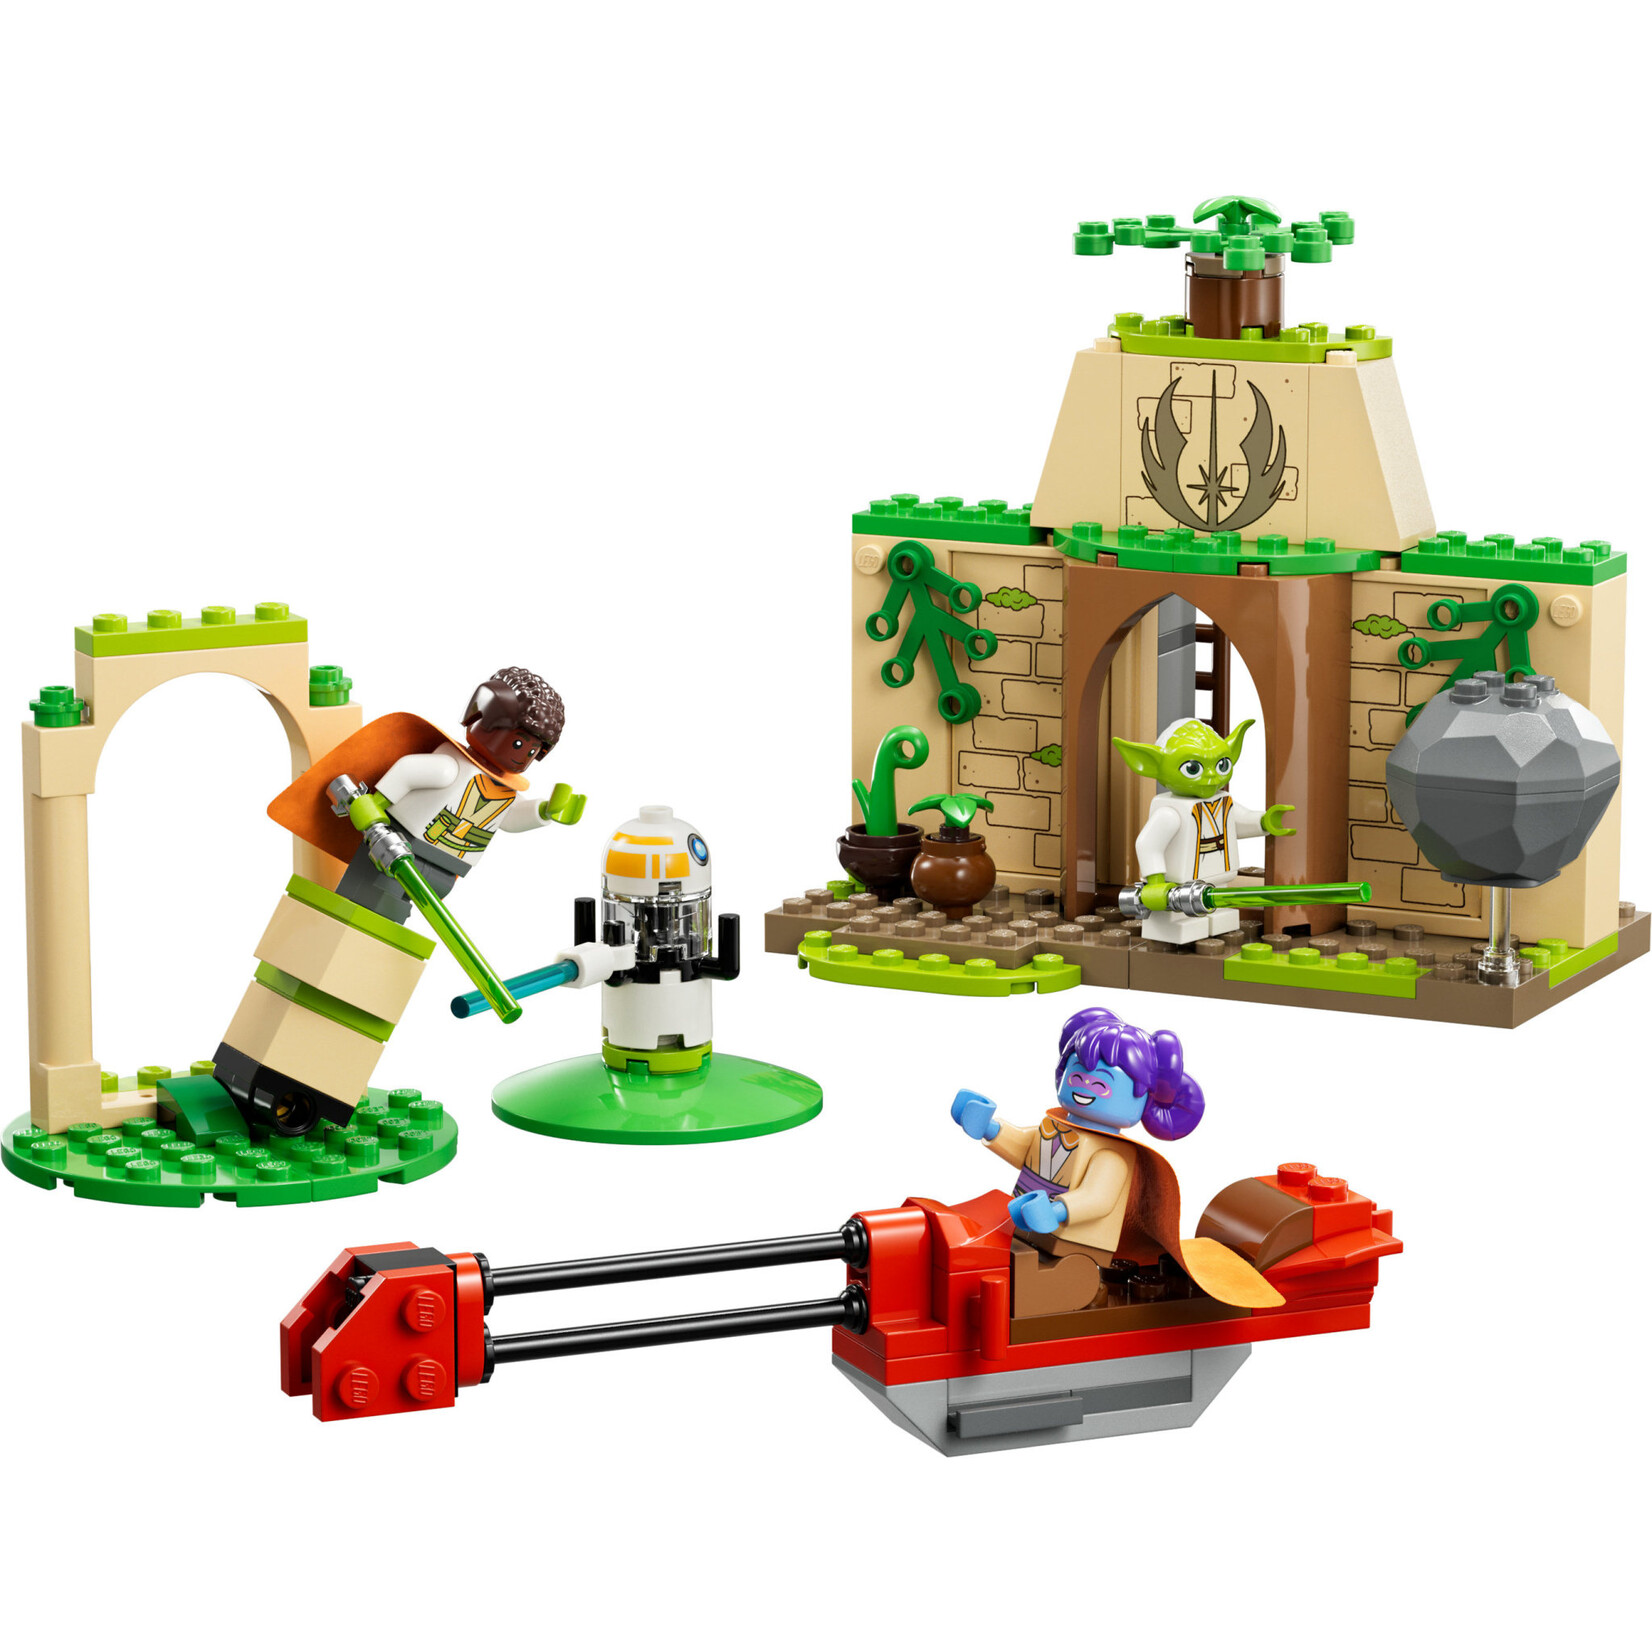 LEGO 75358 LEGO® Star Wars™ Tenoo Jedi Temple™